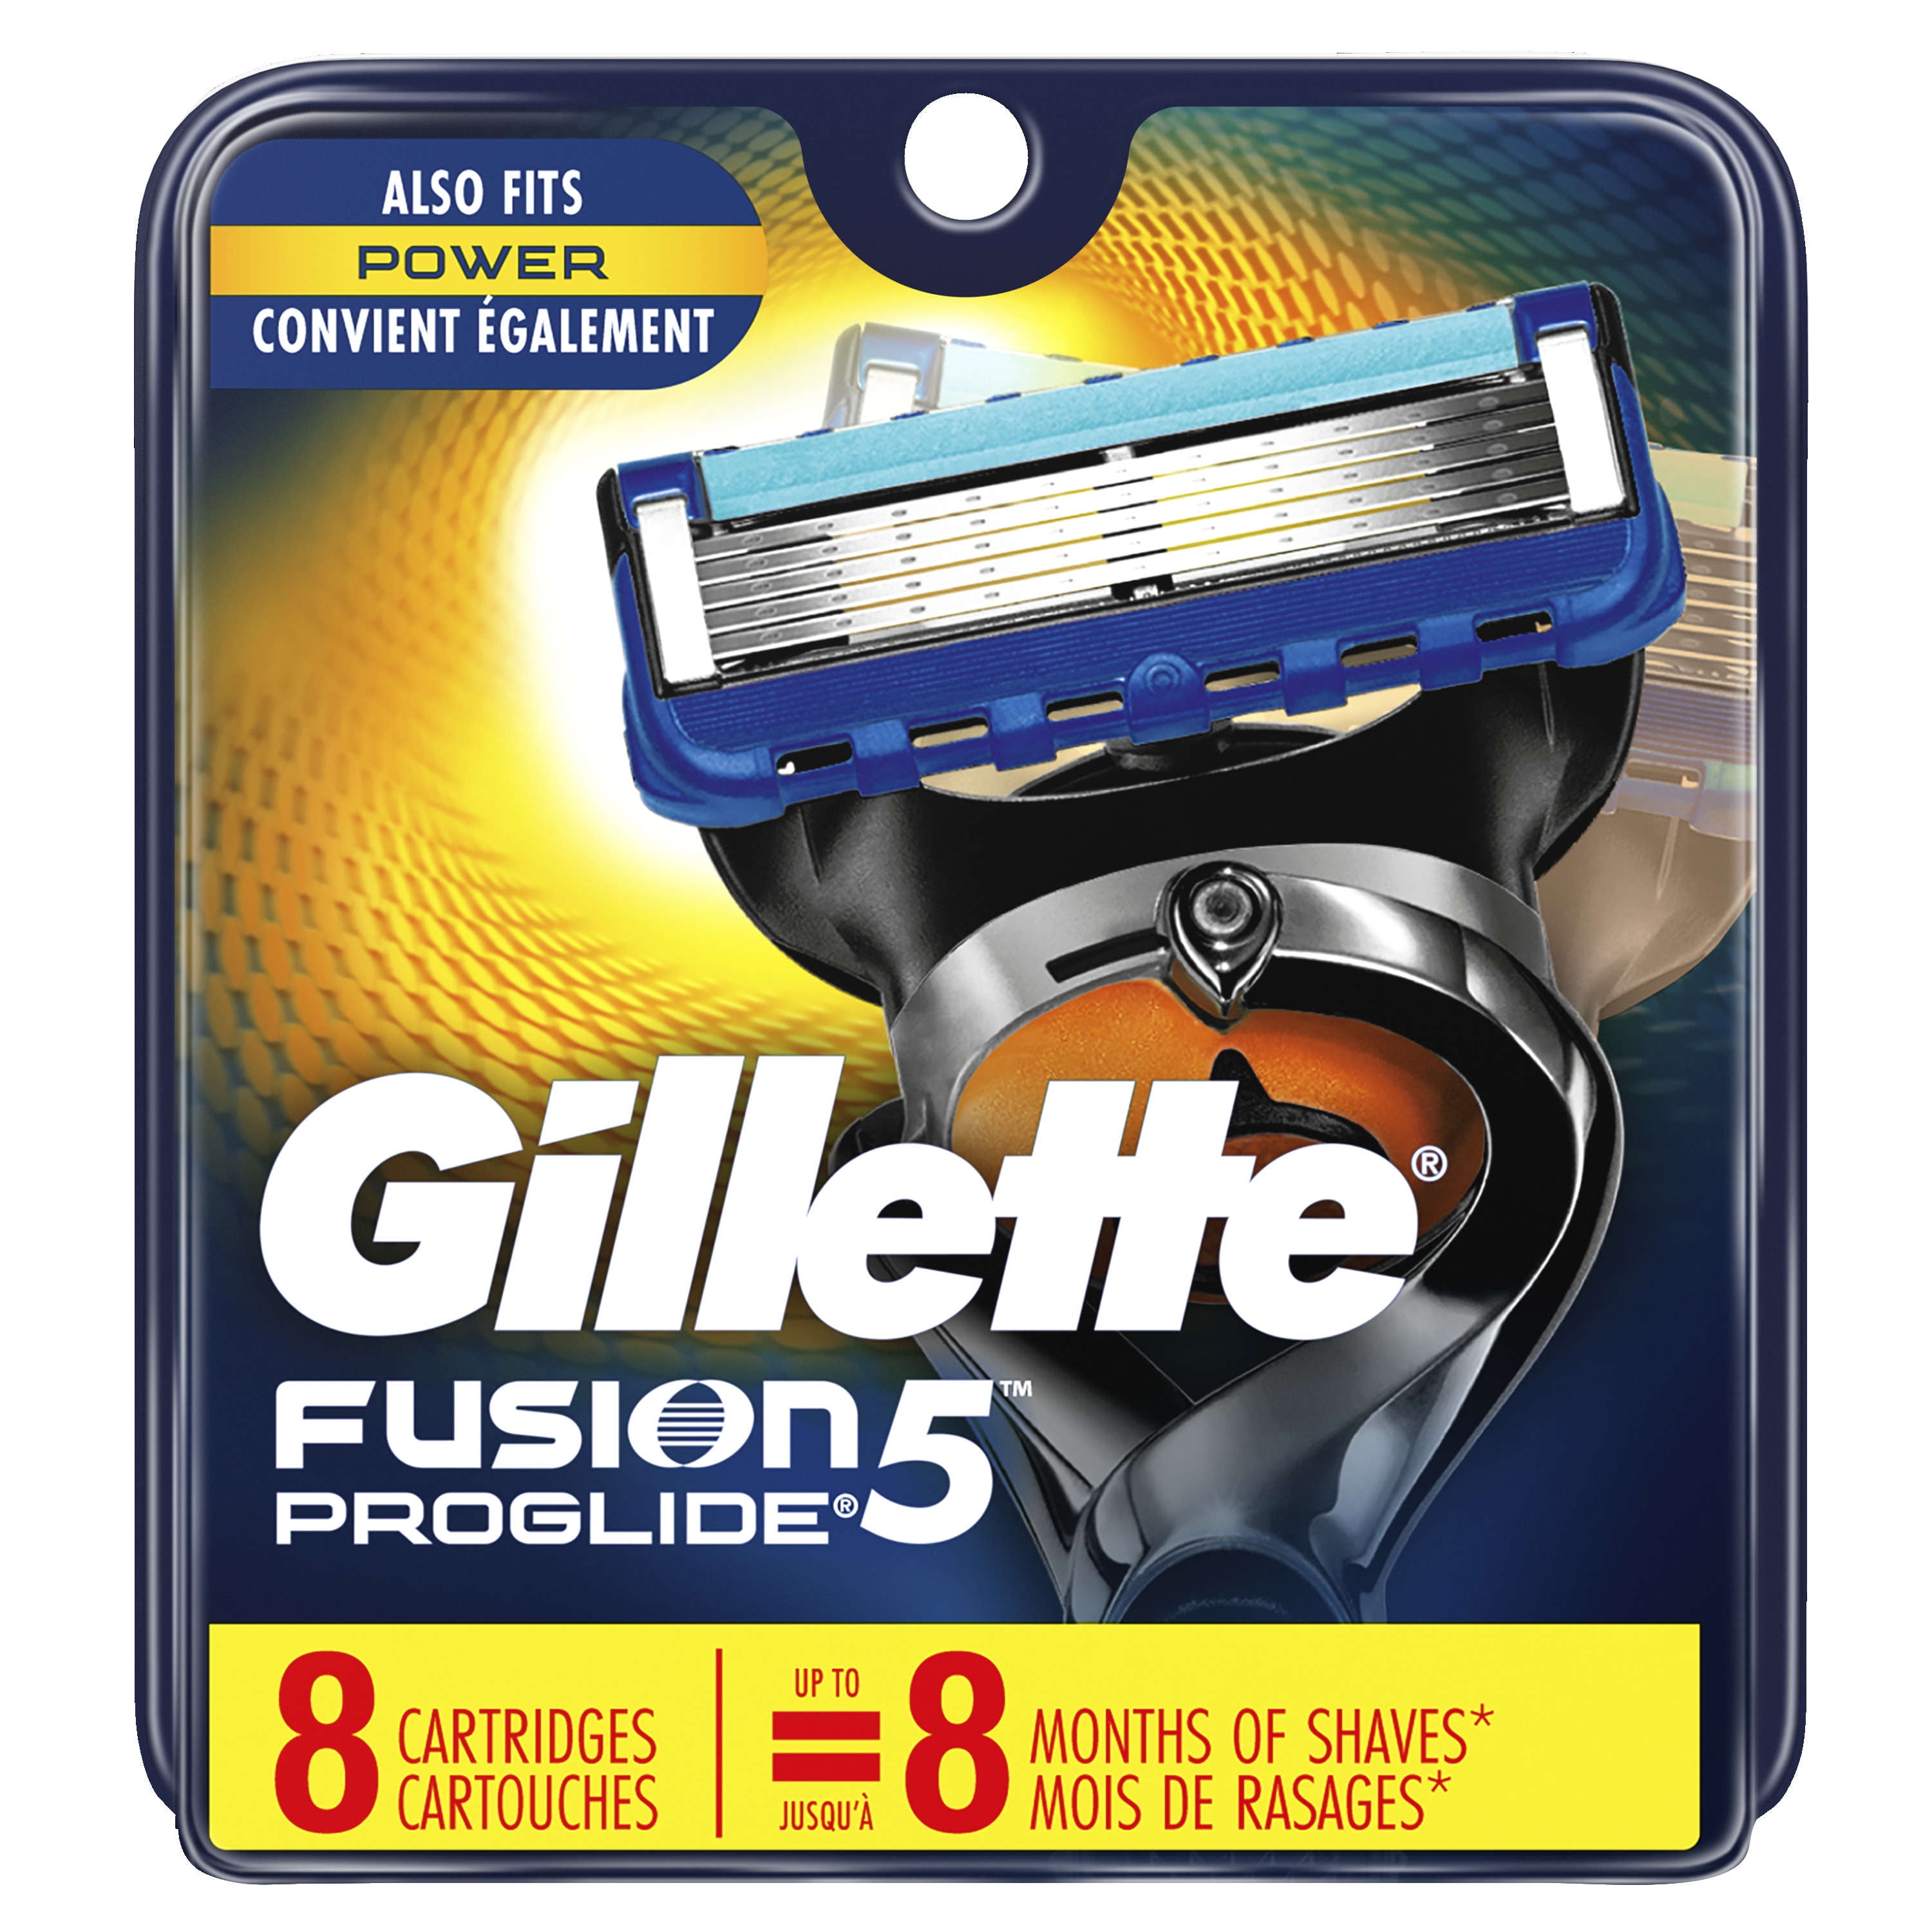 8 Refills each New Lot of 2 x Gillette Fusion5 ProGlide Men’s Razor Blades 